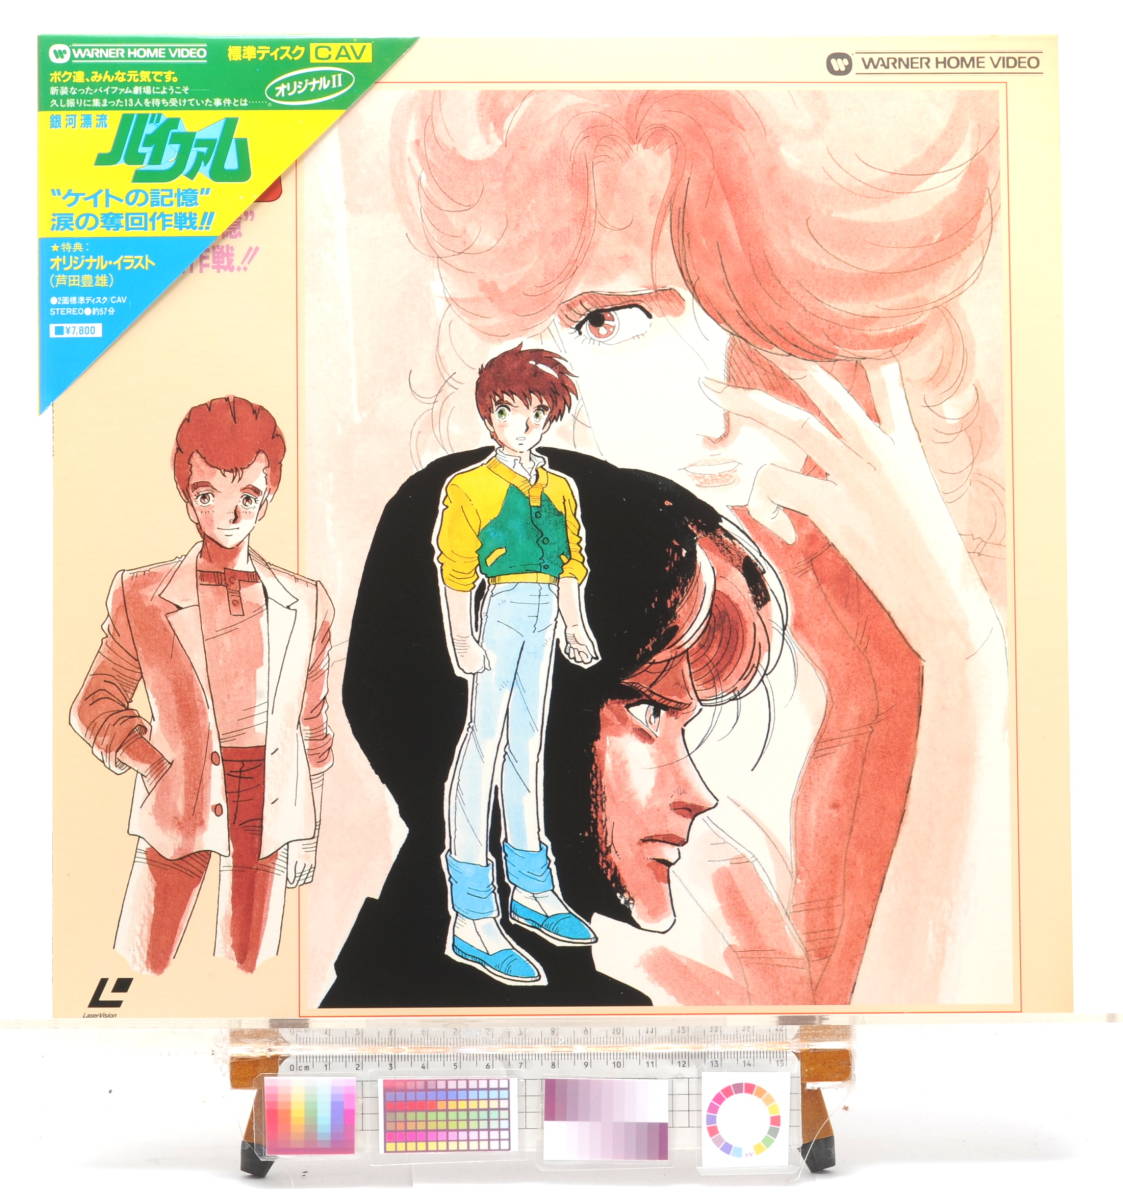 [Delivery Free]1980s- Vifam Memory(Ashida Toyoo)LaserDisc,Jacket[Bonus:LD SOFT]銀河漂流バイファム ケイトの記憶(芦田 豊雄)[tagLD]